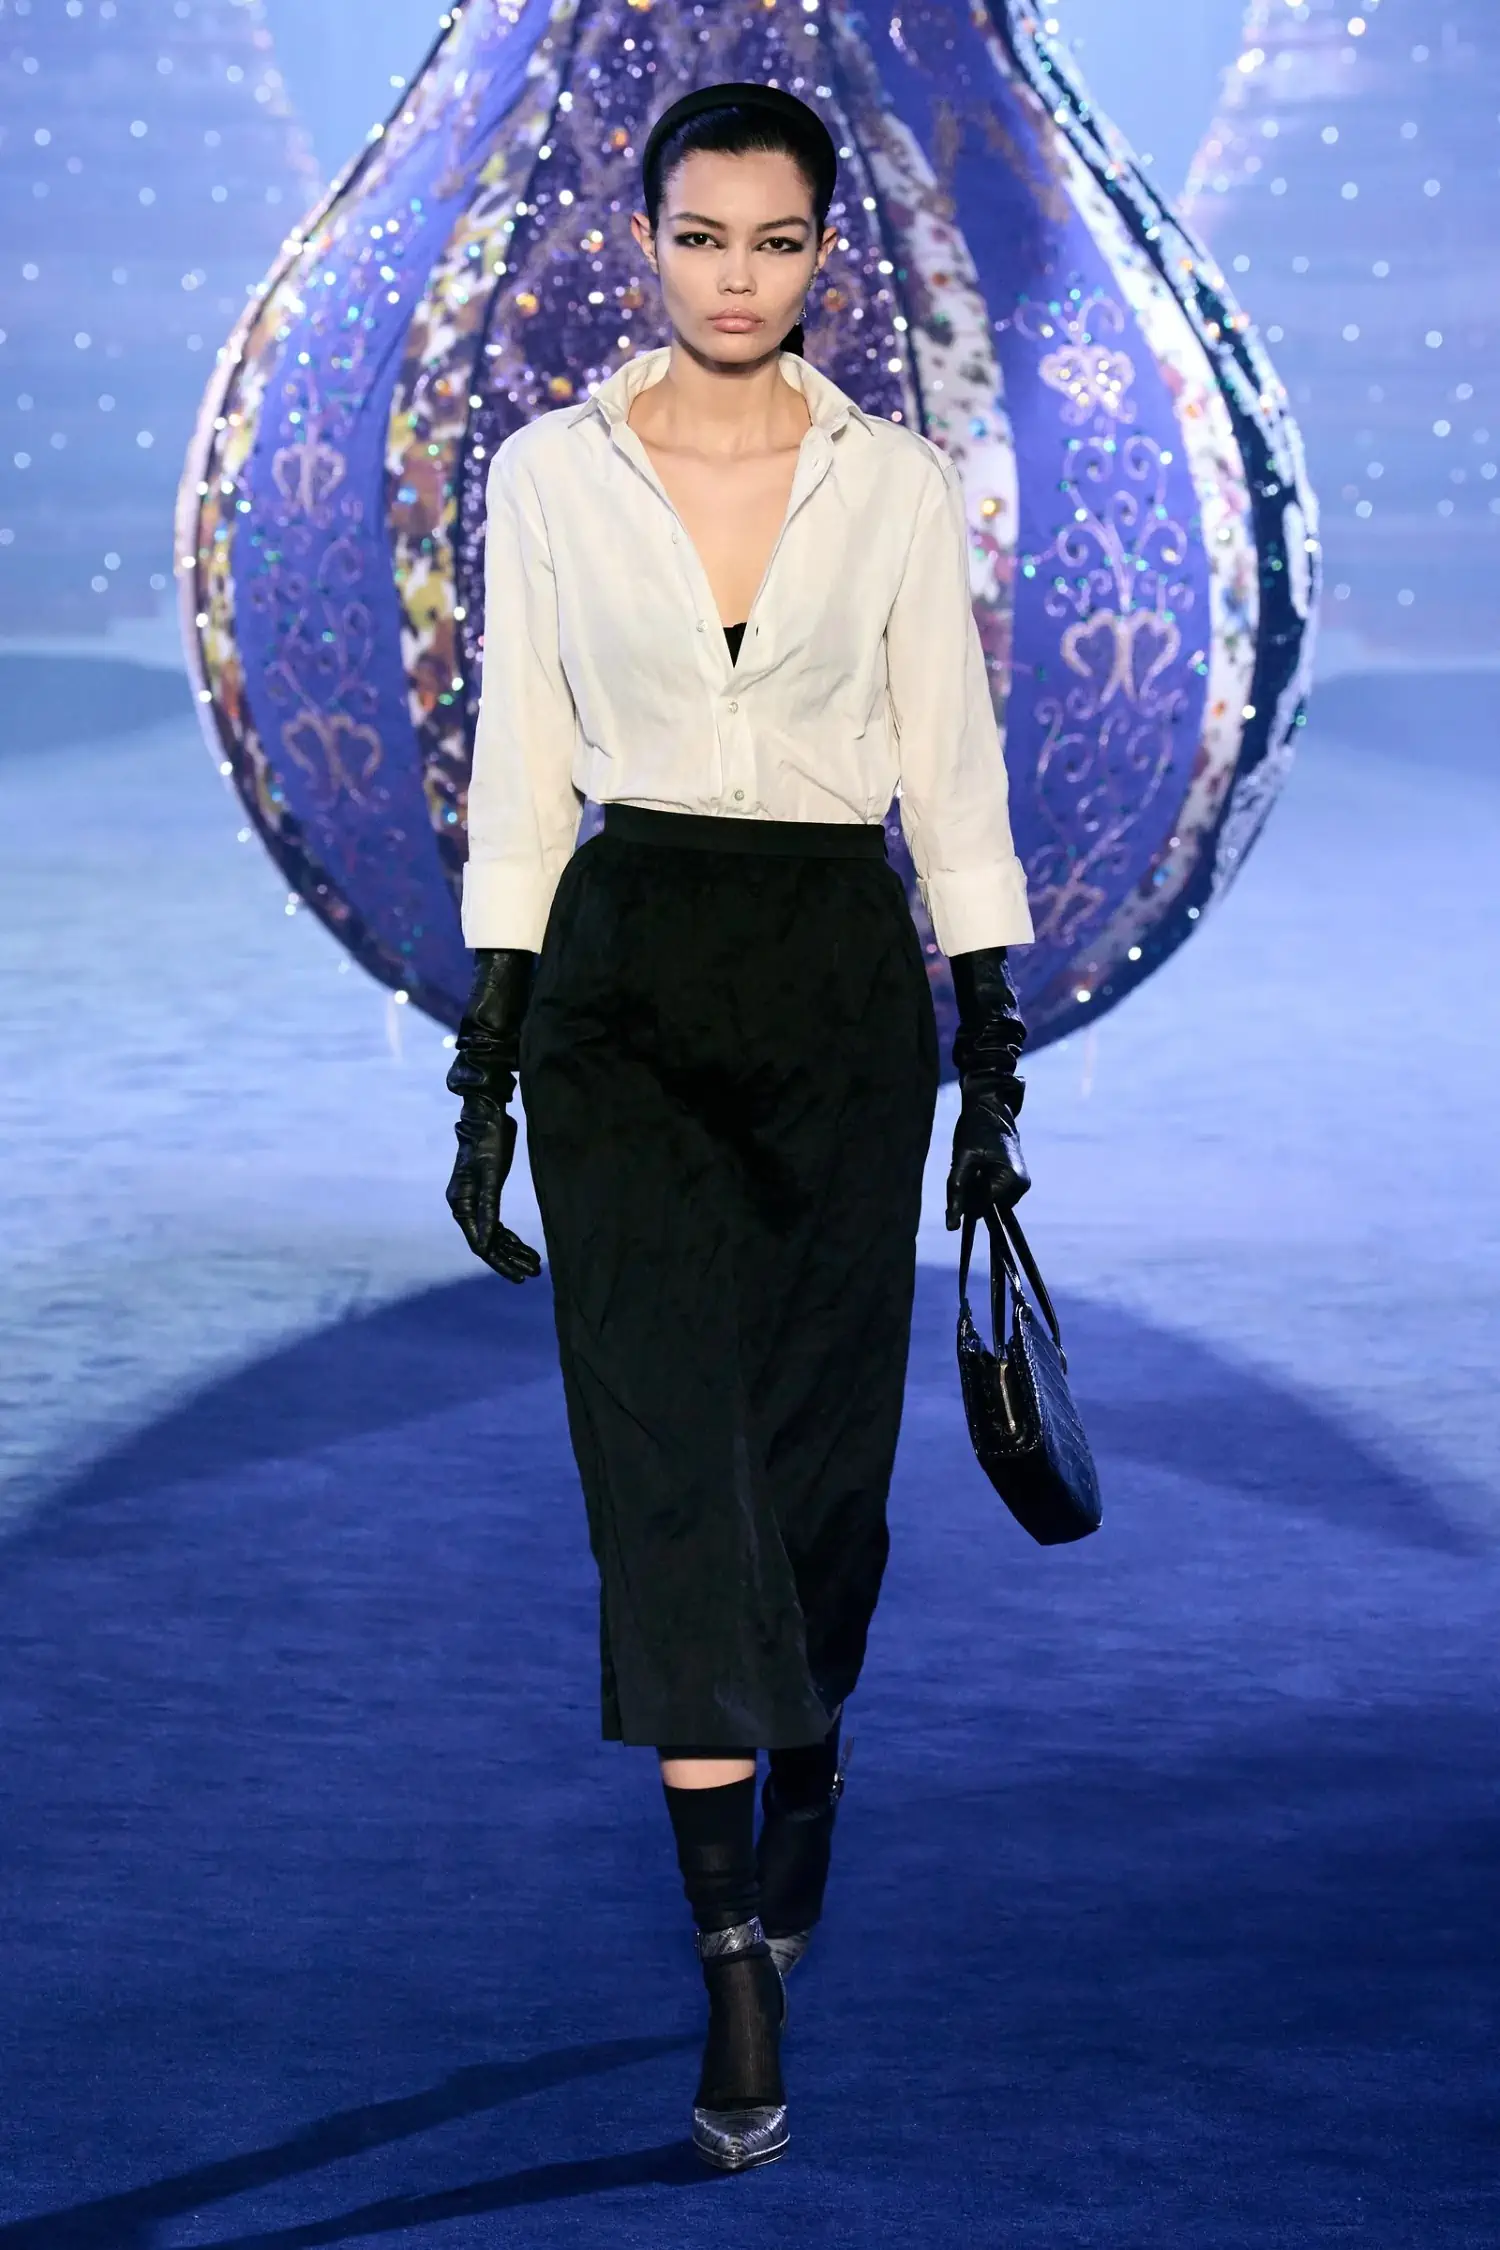 Discover the Dior Fall 2023 advertising campaignFashionela